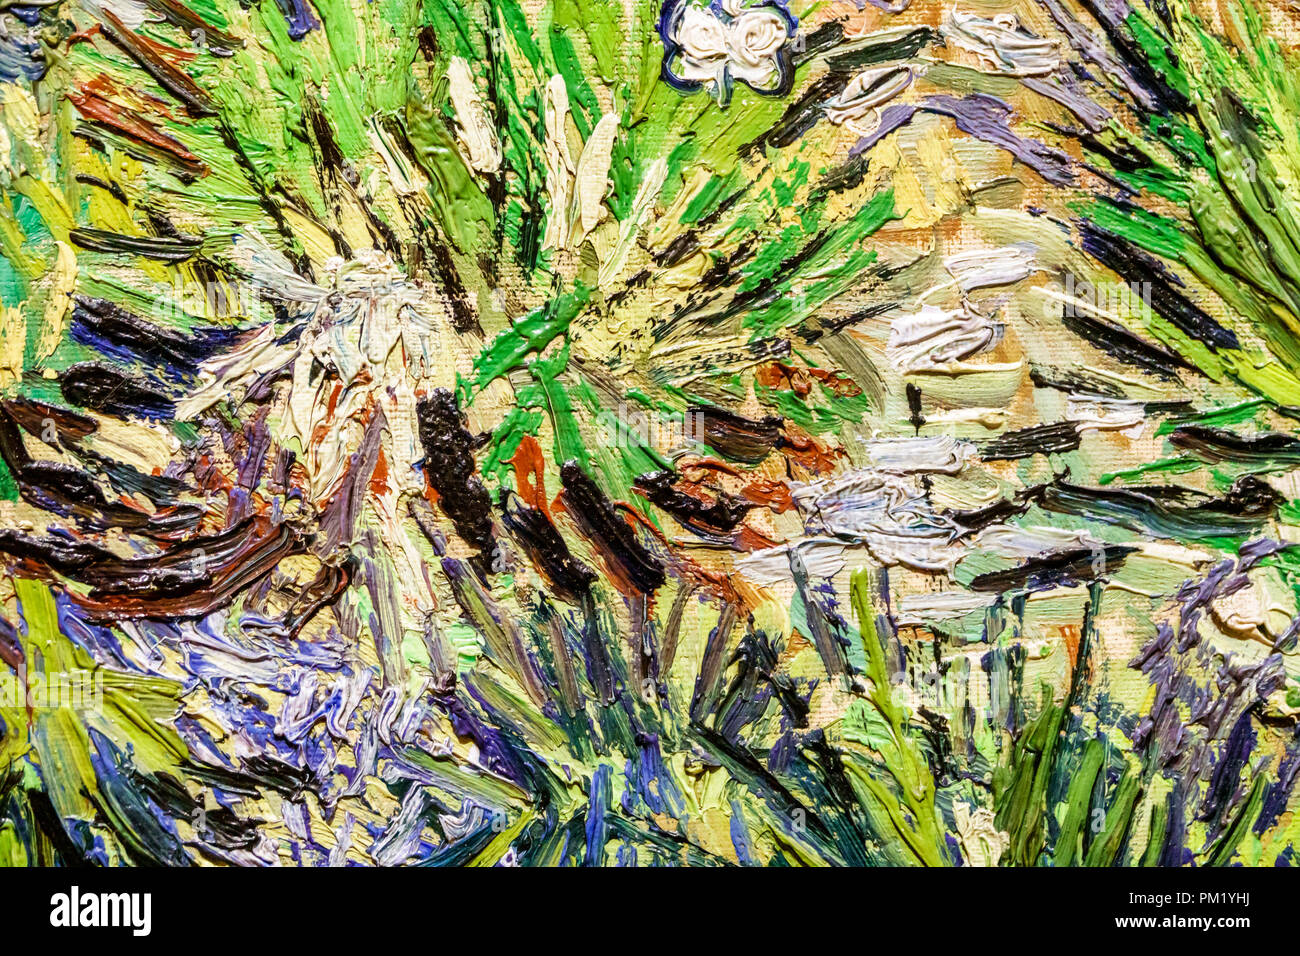 London England,UK,Trafalgar Square,The NationalGallery,art museum,inside interior,Vincent van Gogh Long Grass with Butterflies,close-up detail,impasto Stock Photo